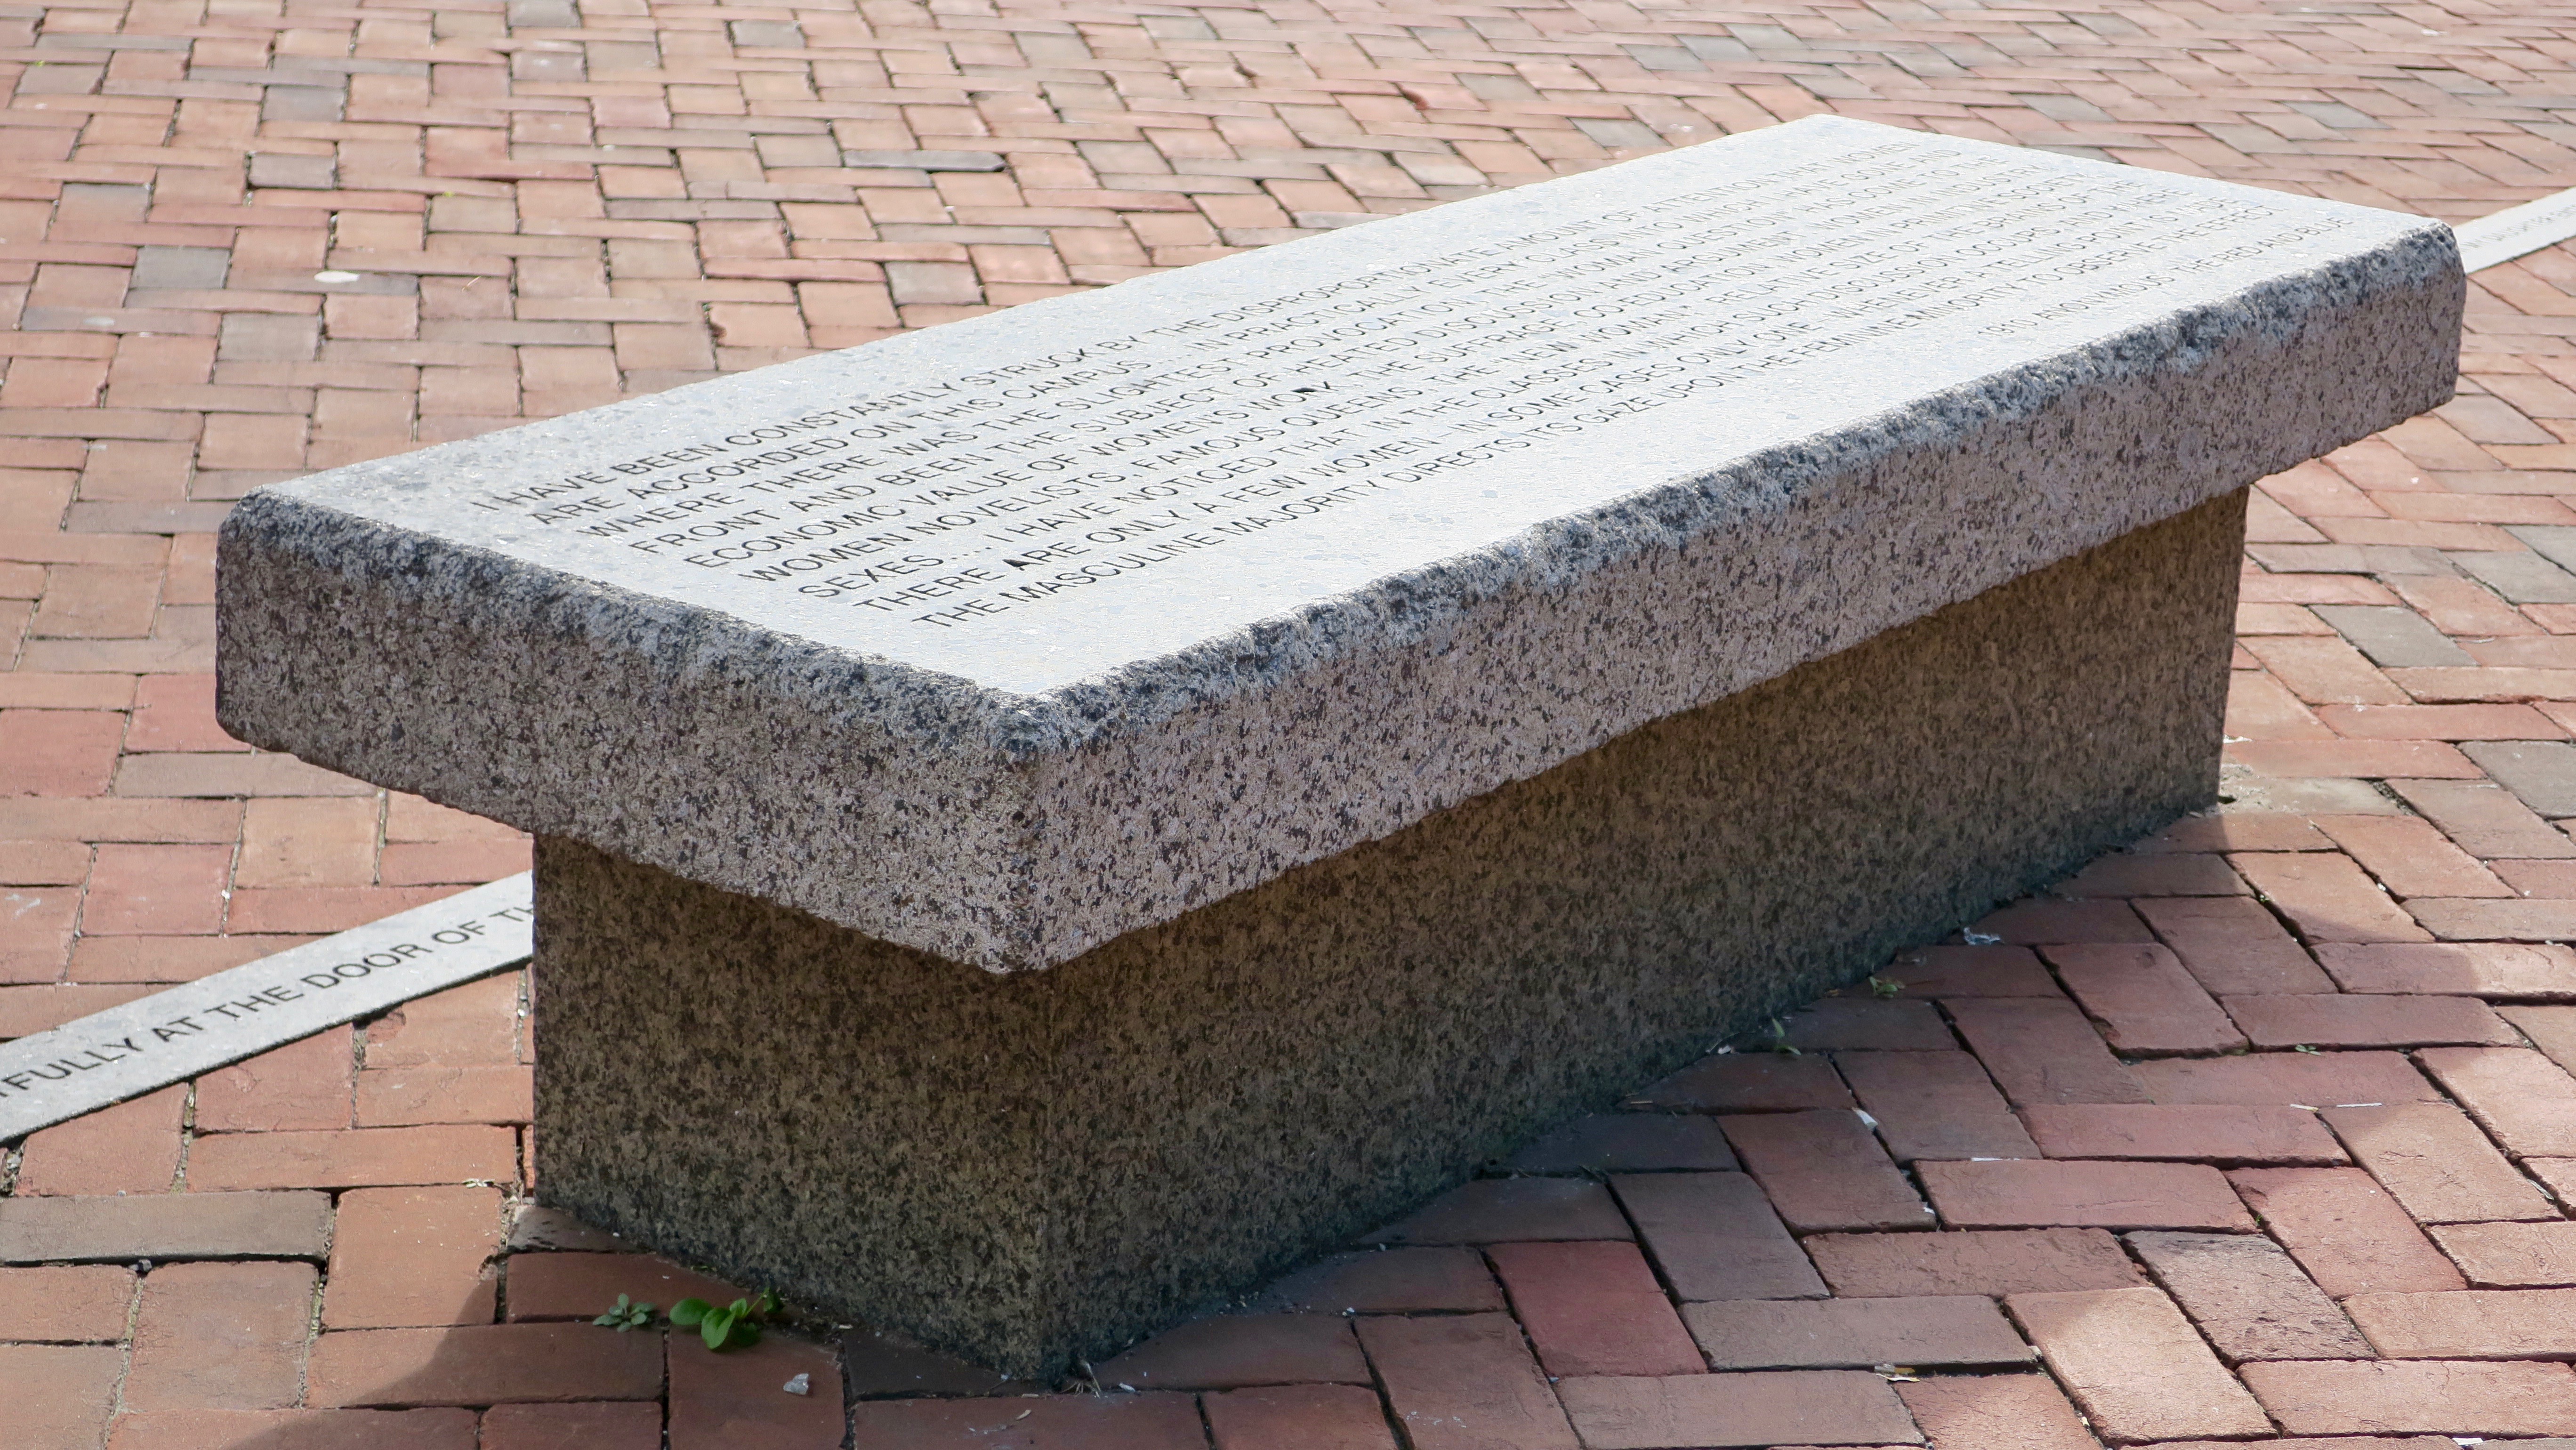 granite bench and curbing on brick walkway